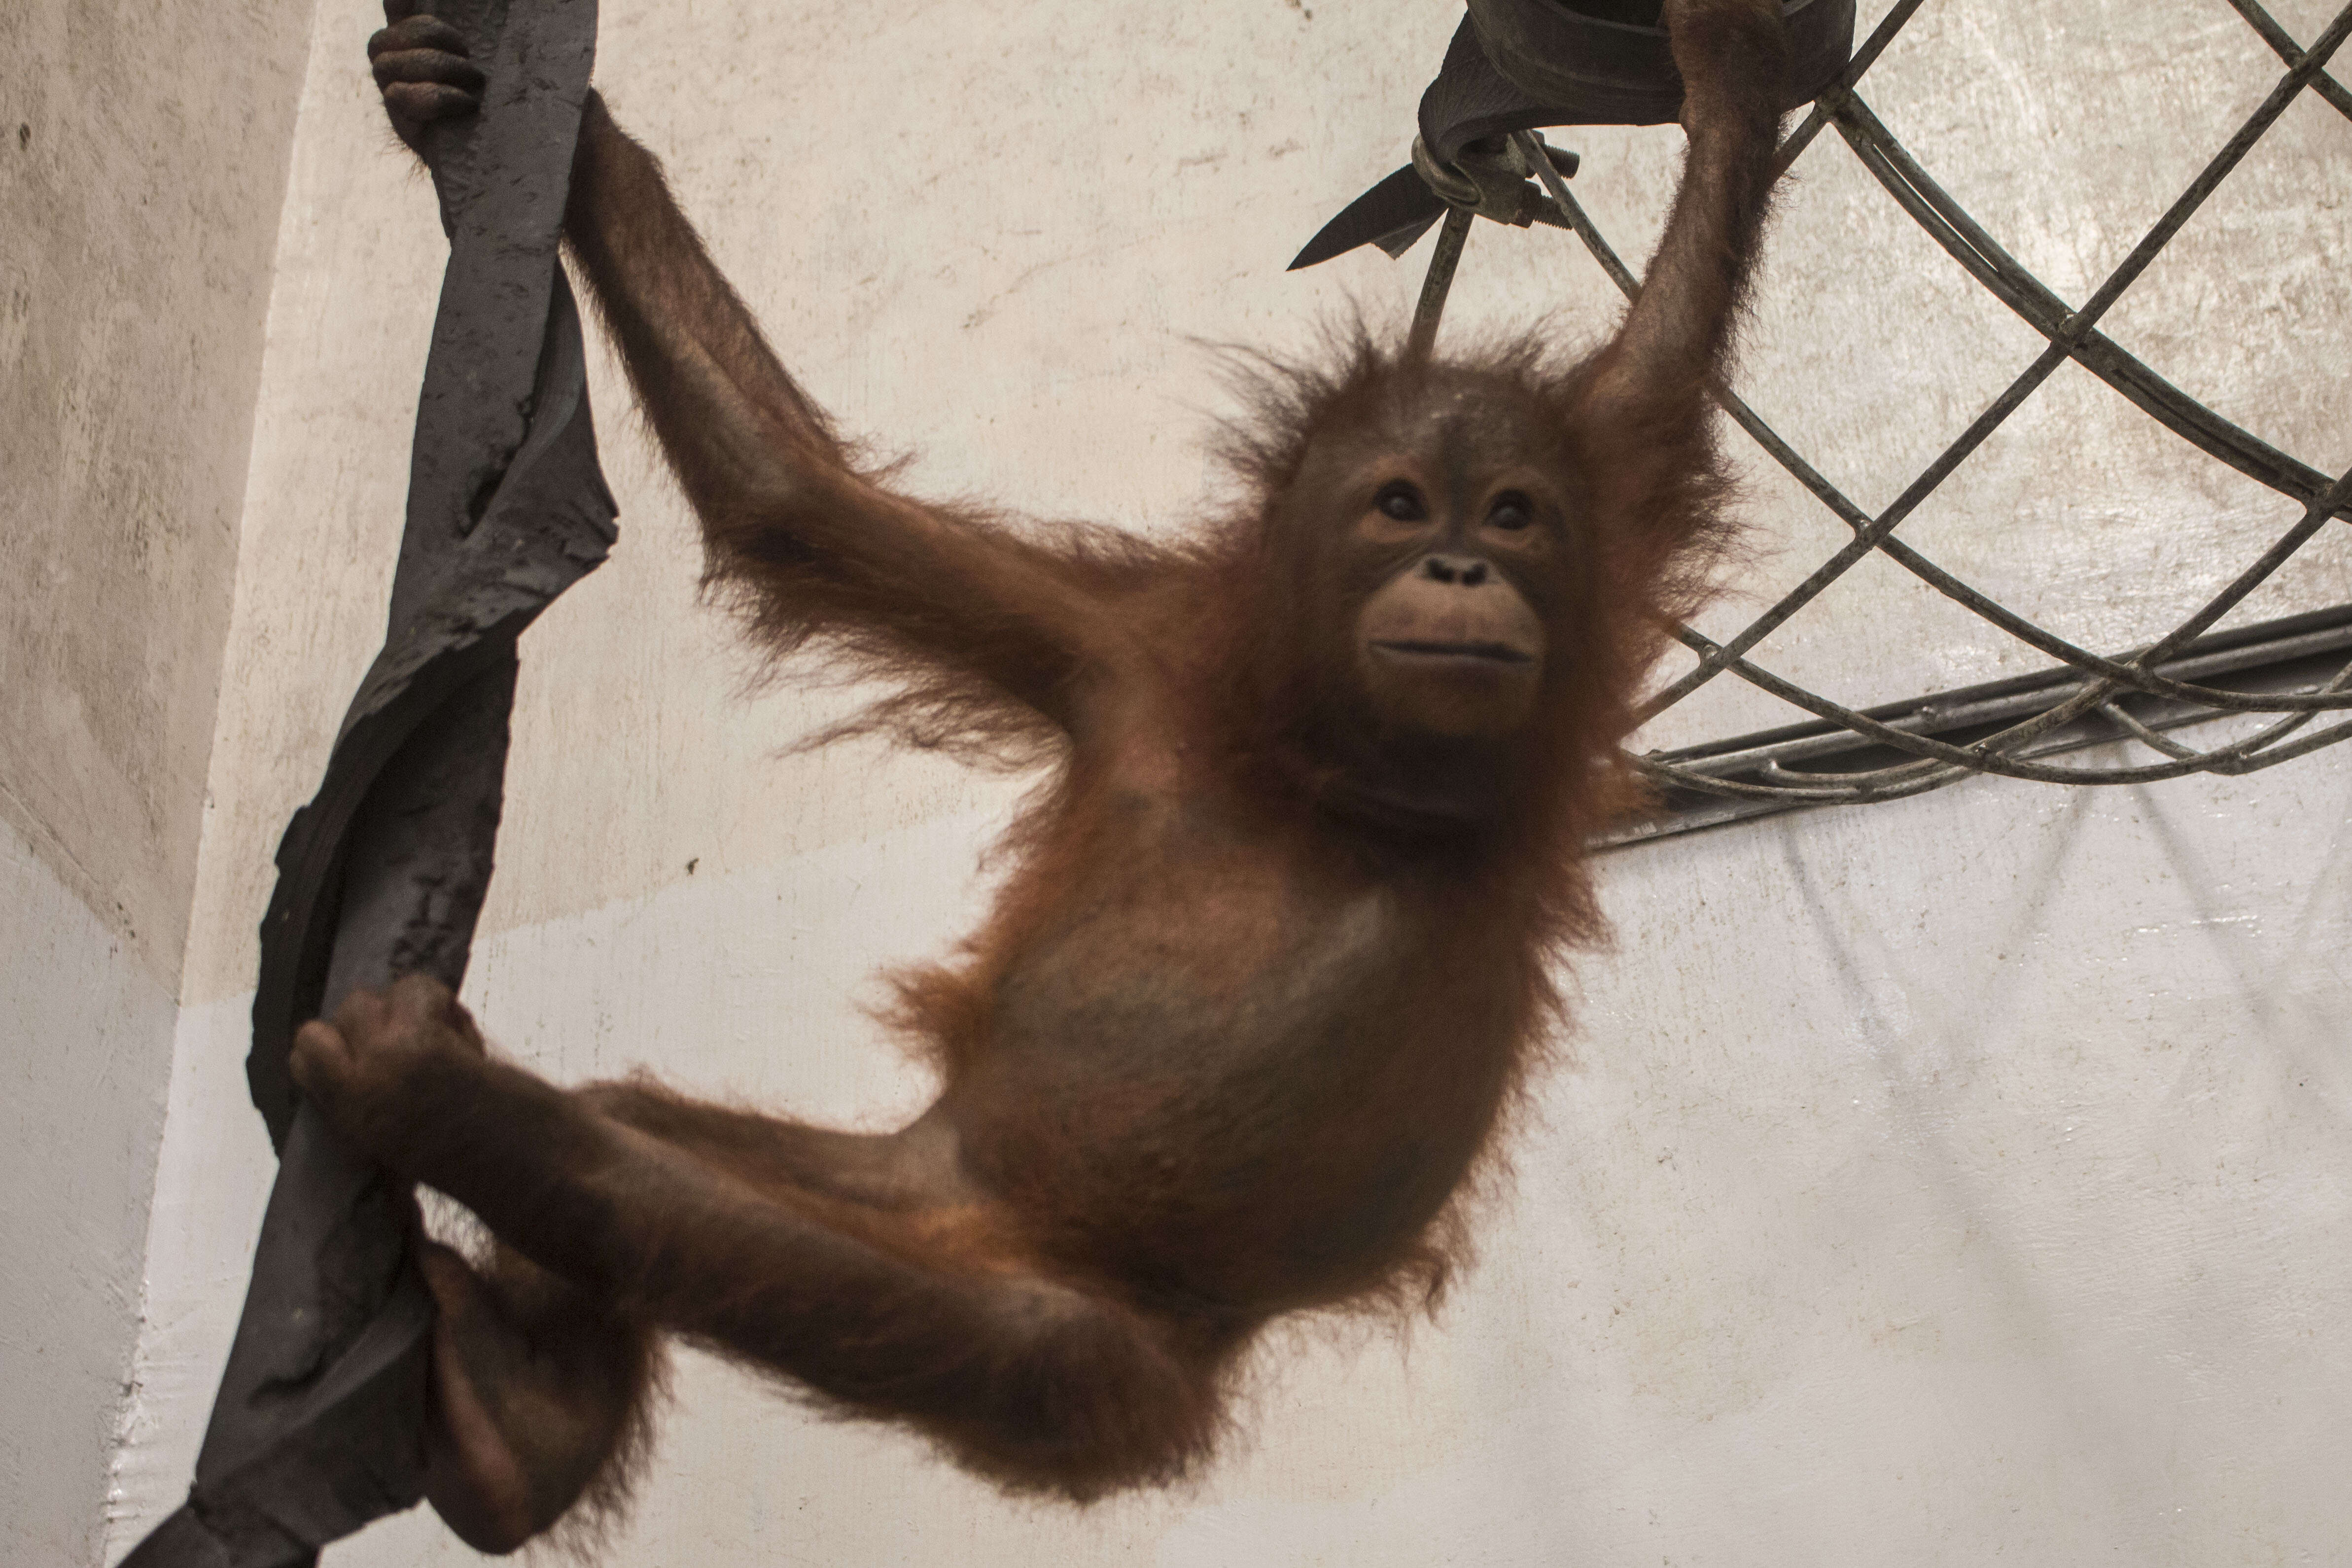 Baby orangutan swinging around in quarantine center